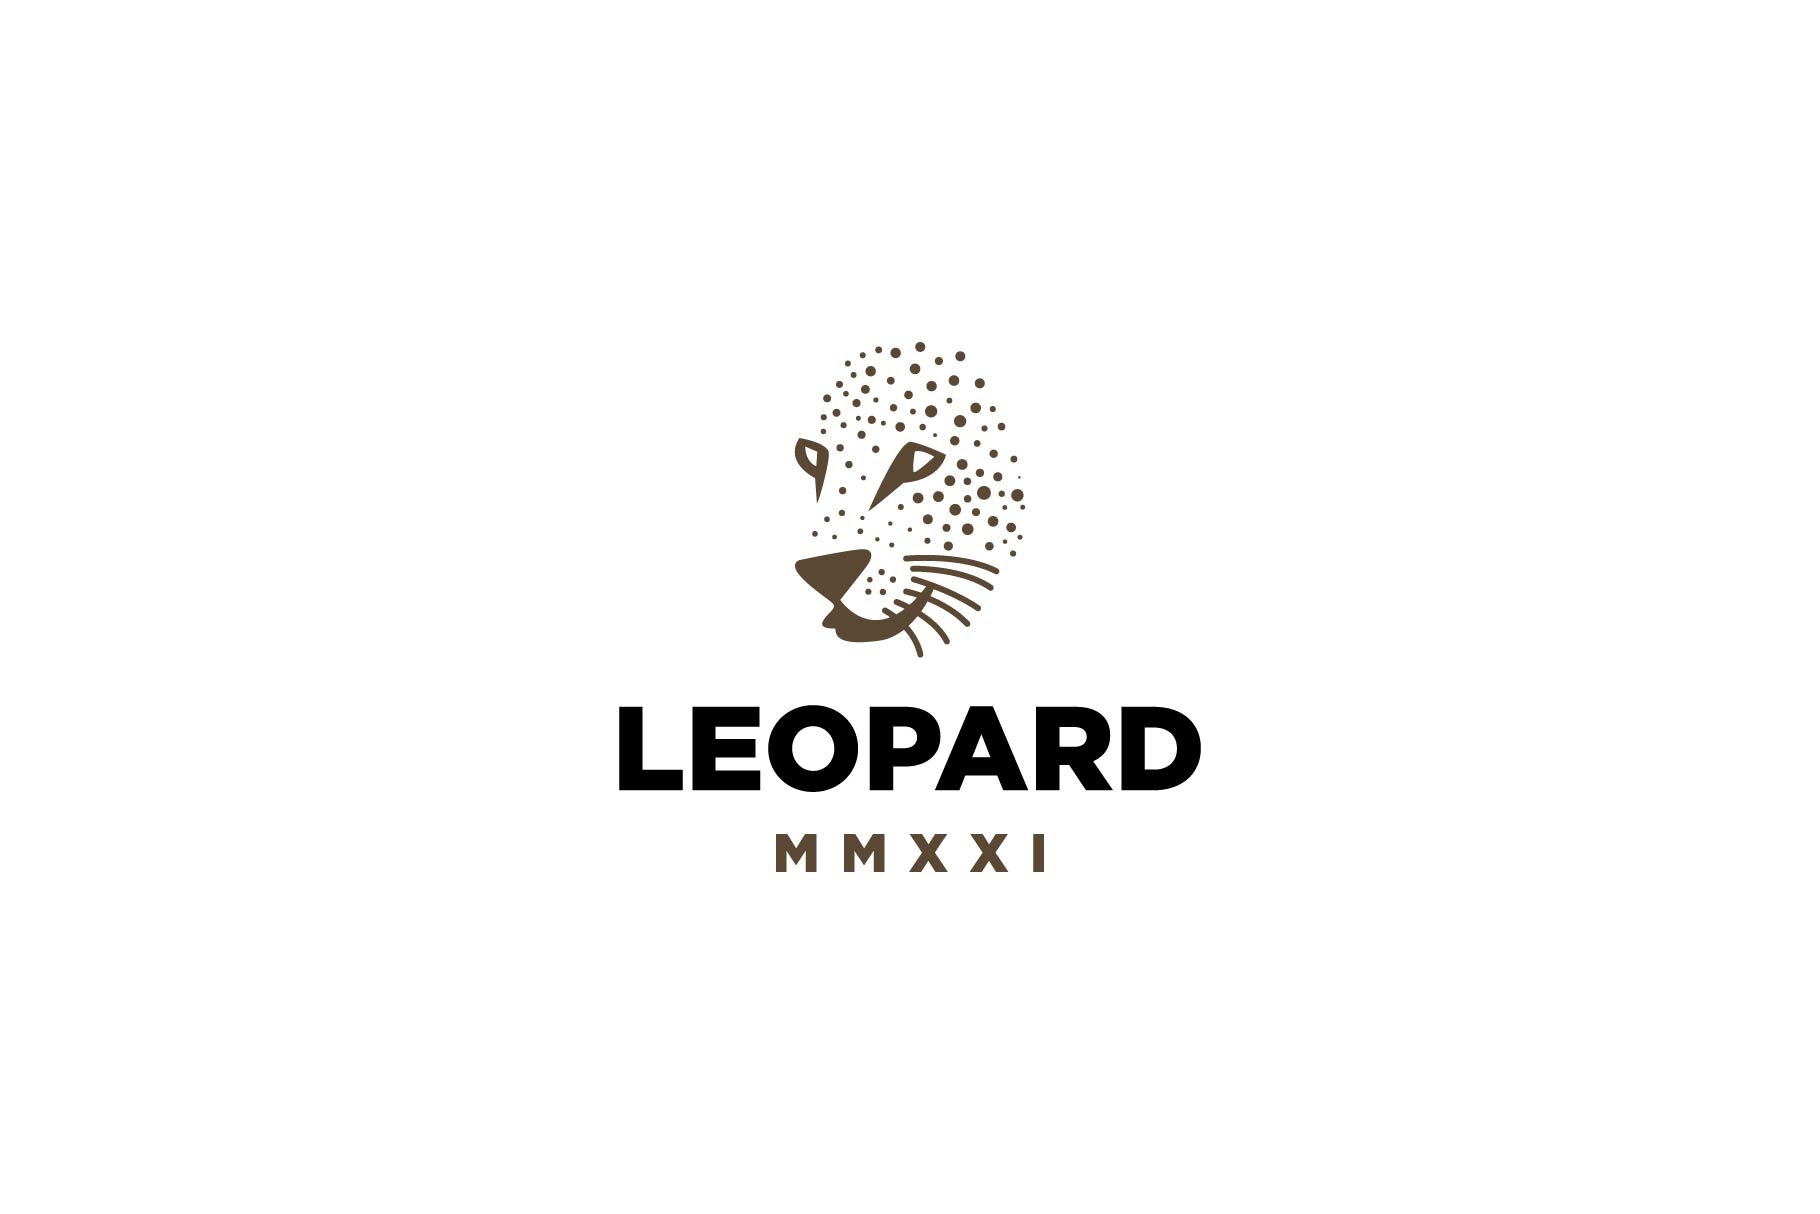 leopard face logo cover image.